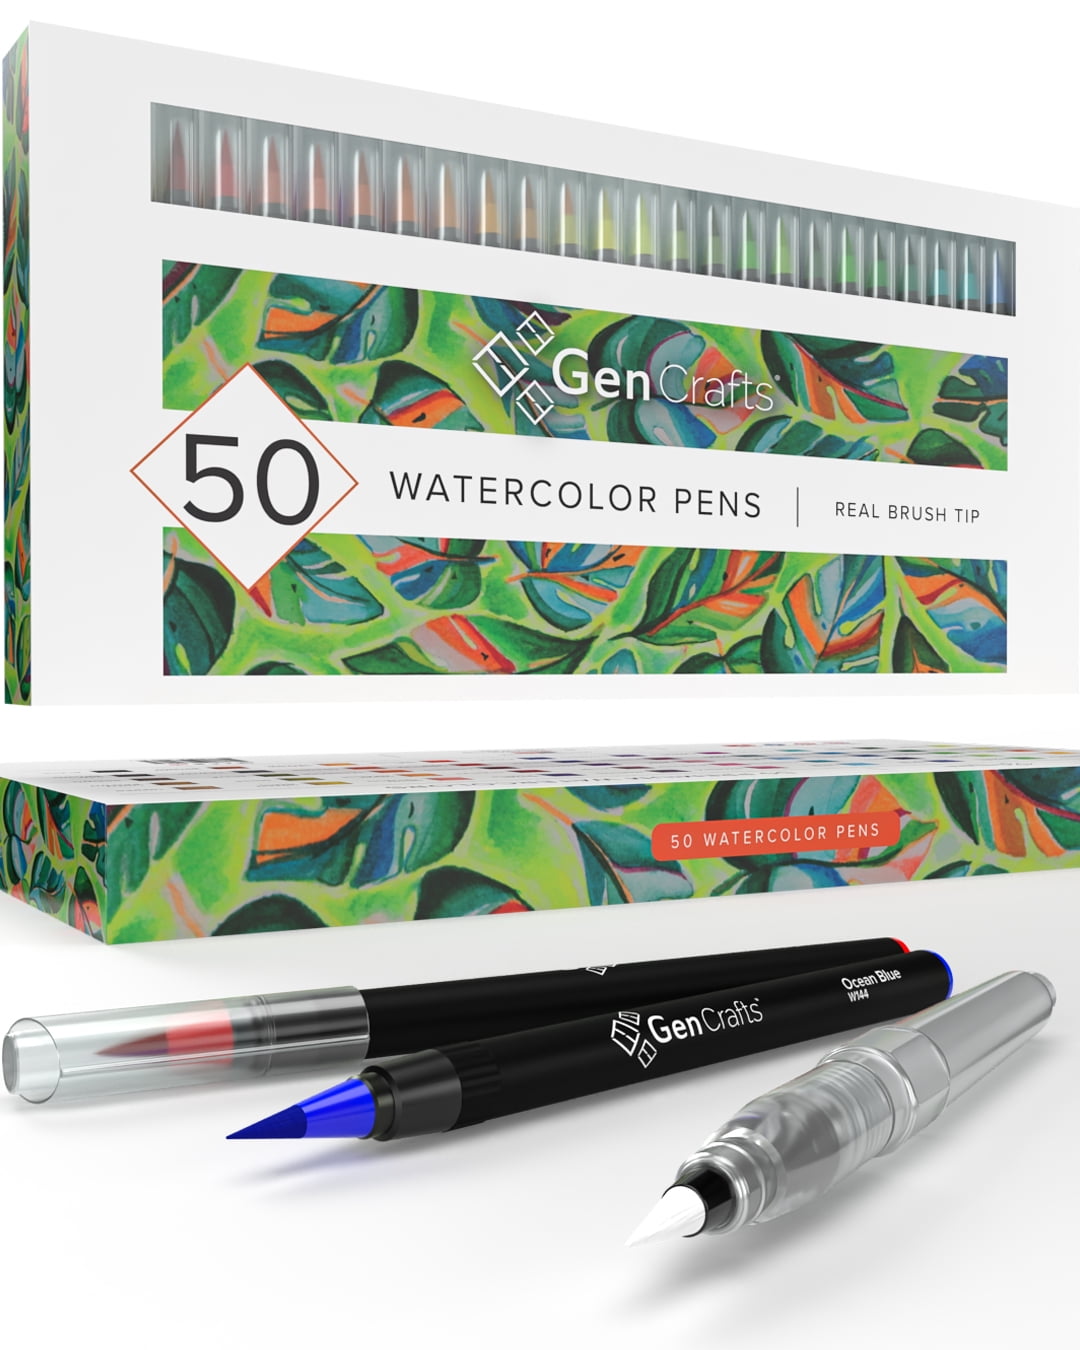 Watercolor Brush Pens by Genuine Crafts - Set of 50 Premium Colors - Real Brush